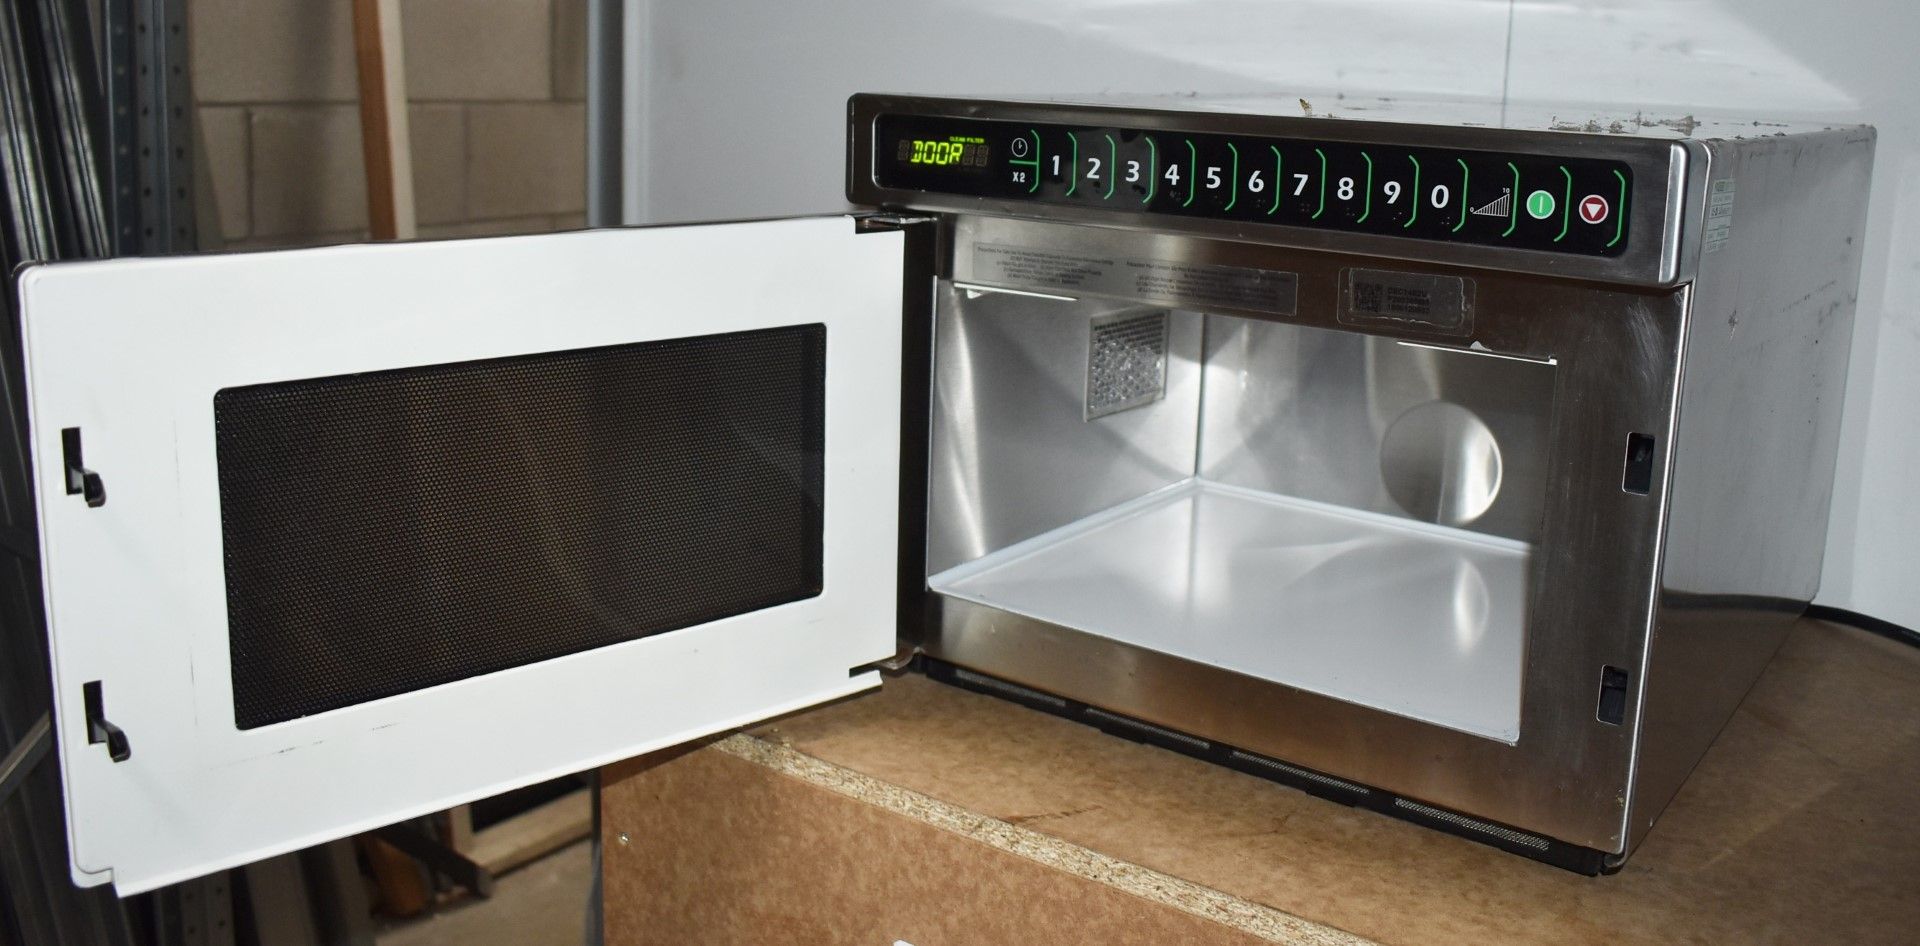 1 x Menumaster Commercial Microwave Oven - Model DEC14E2U - 1.4kW, 13A, 17Ltr - 2018 Model - - Image 11 of 12